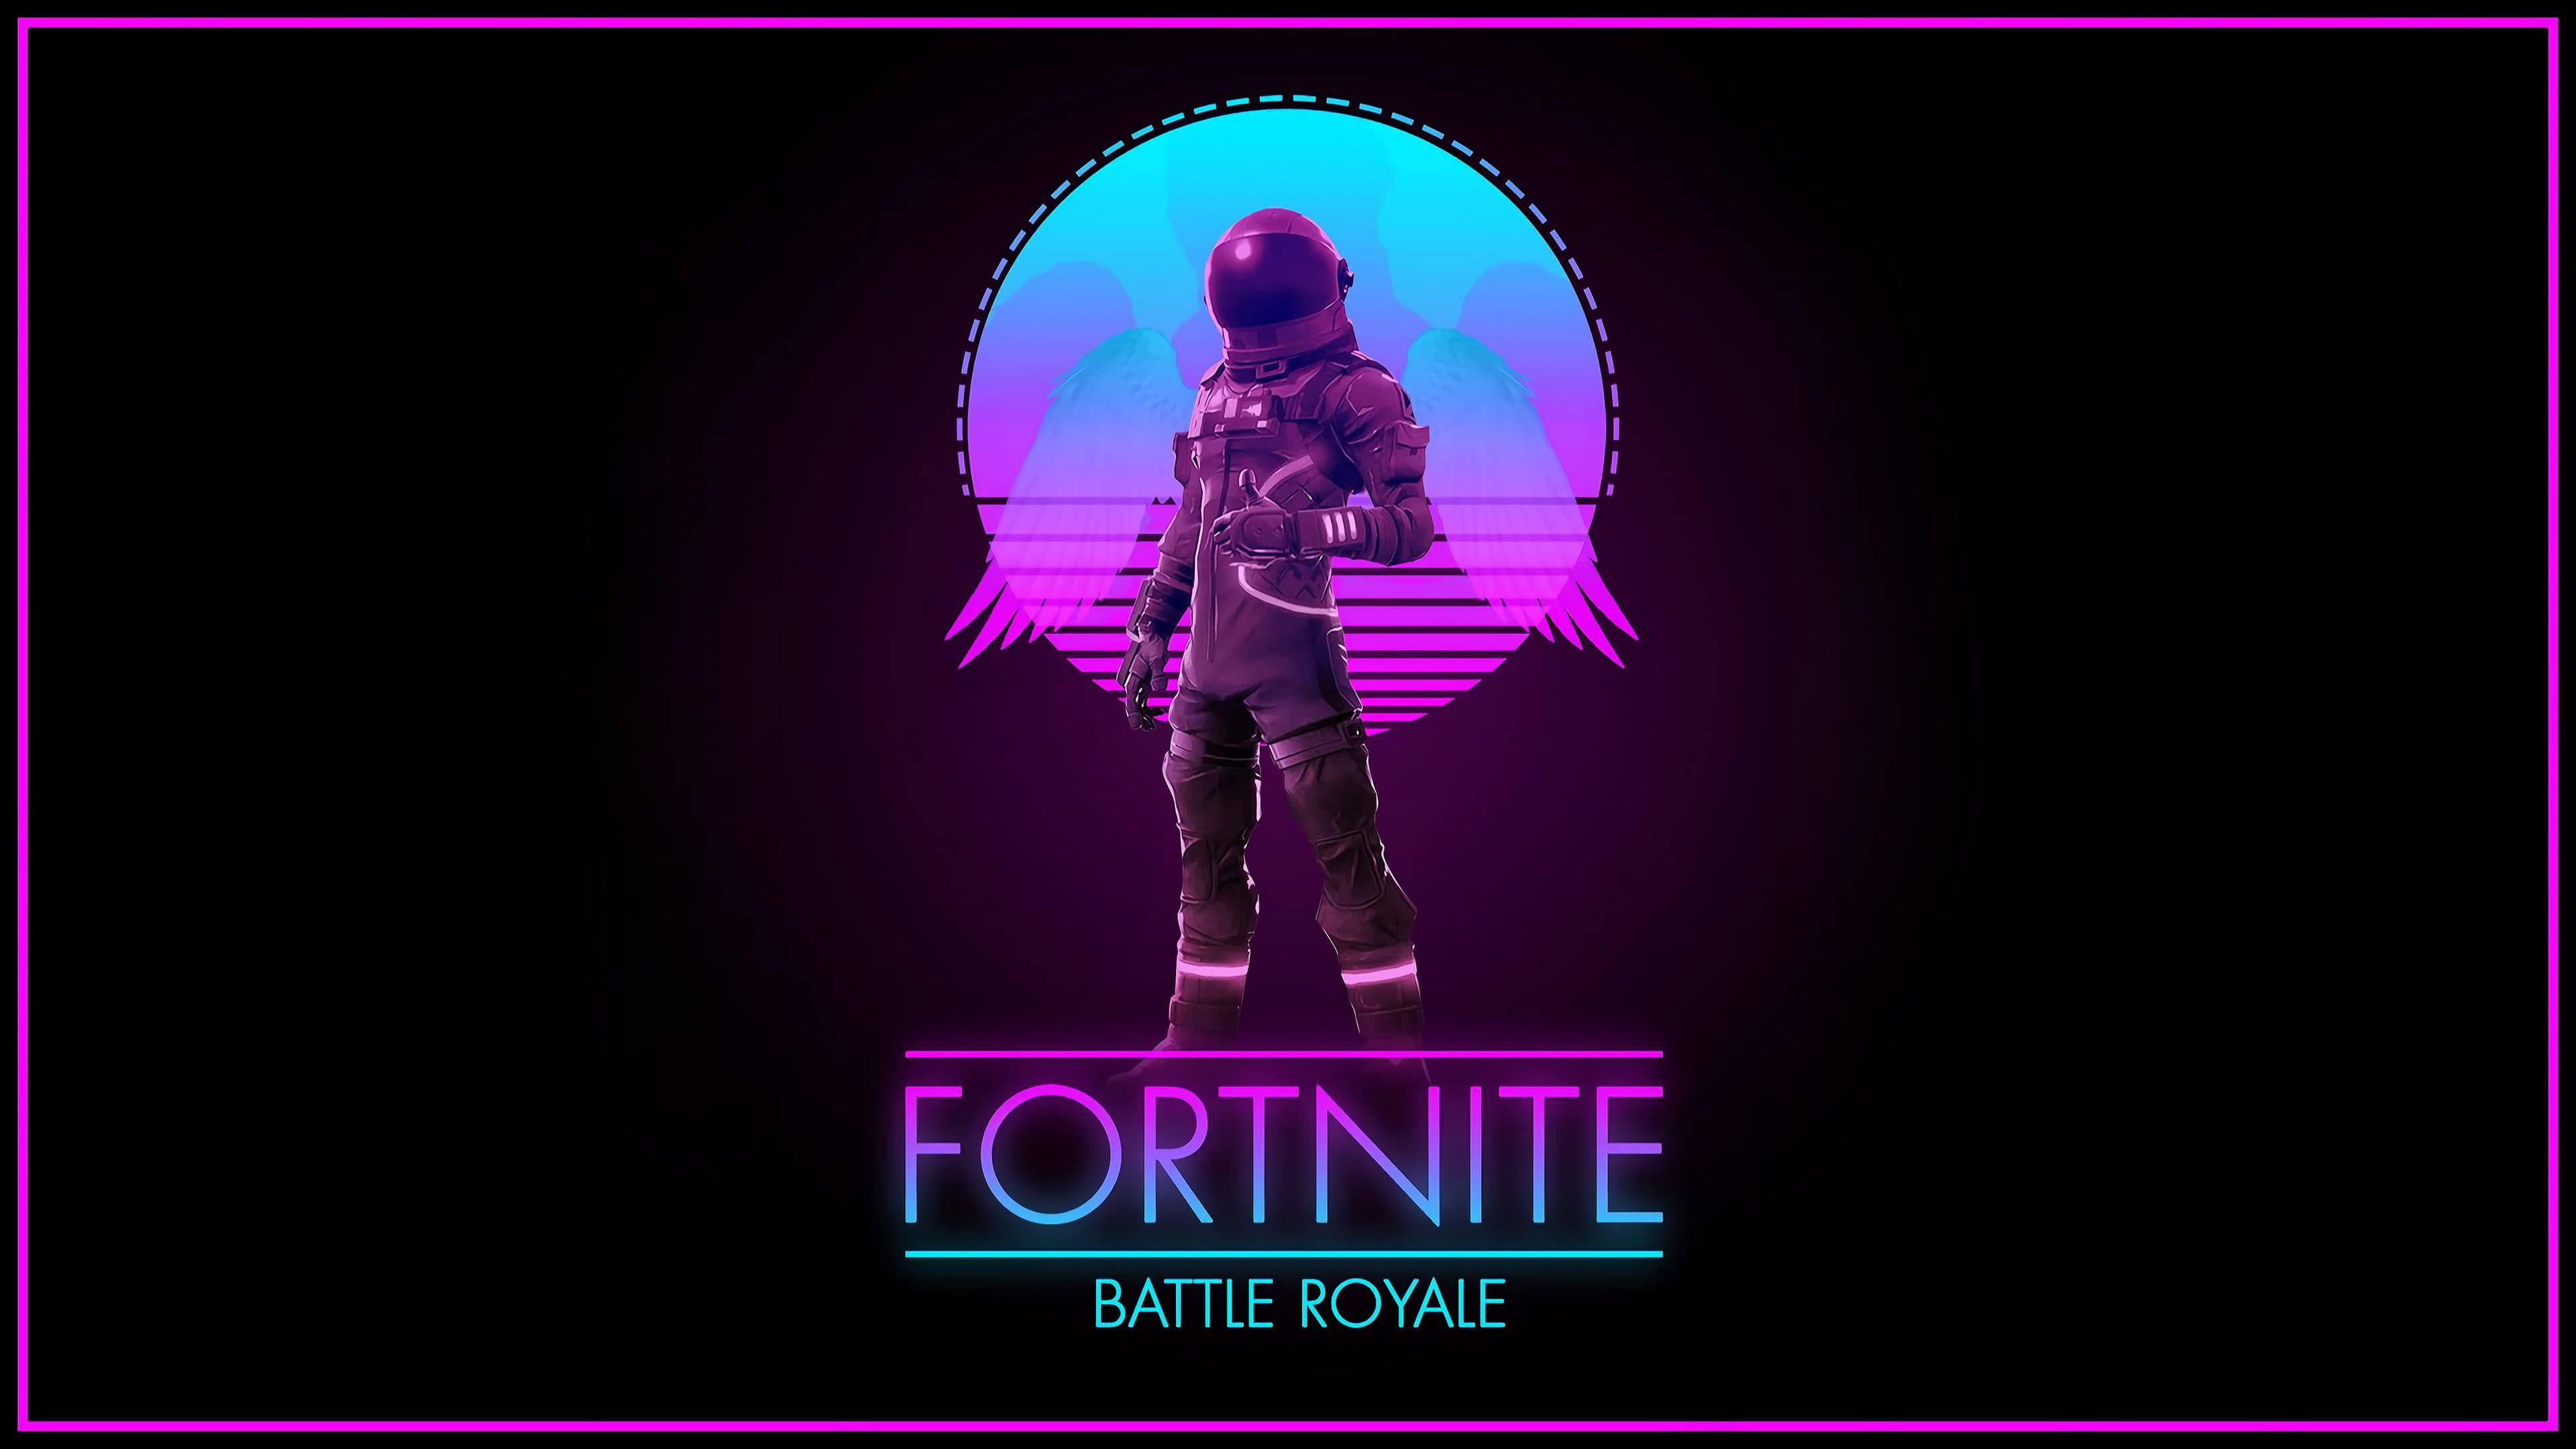 Fortnite Battle Royale Logo - Fortnite Battle Royale Logo UHD 4K Wallpaper | Pixelz